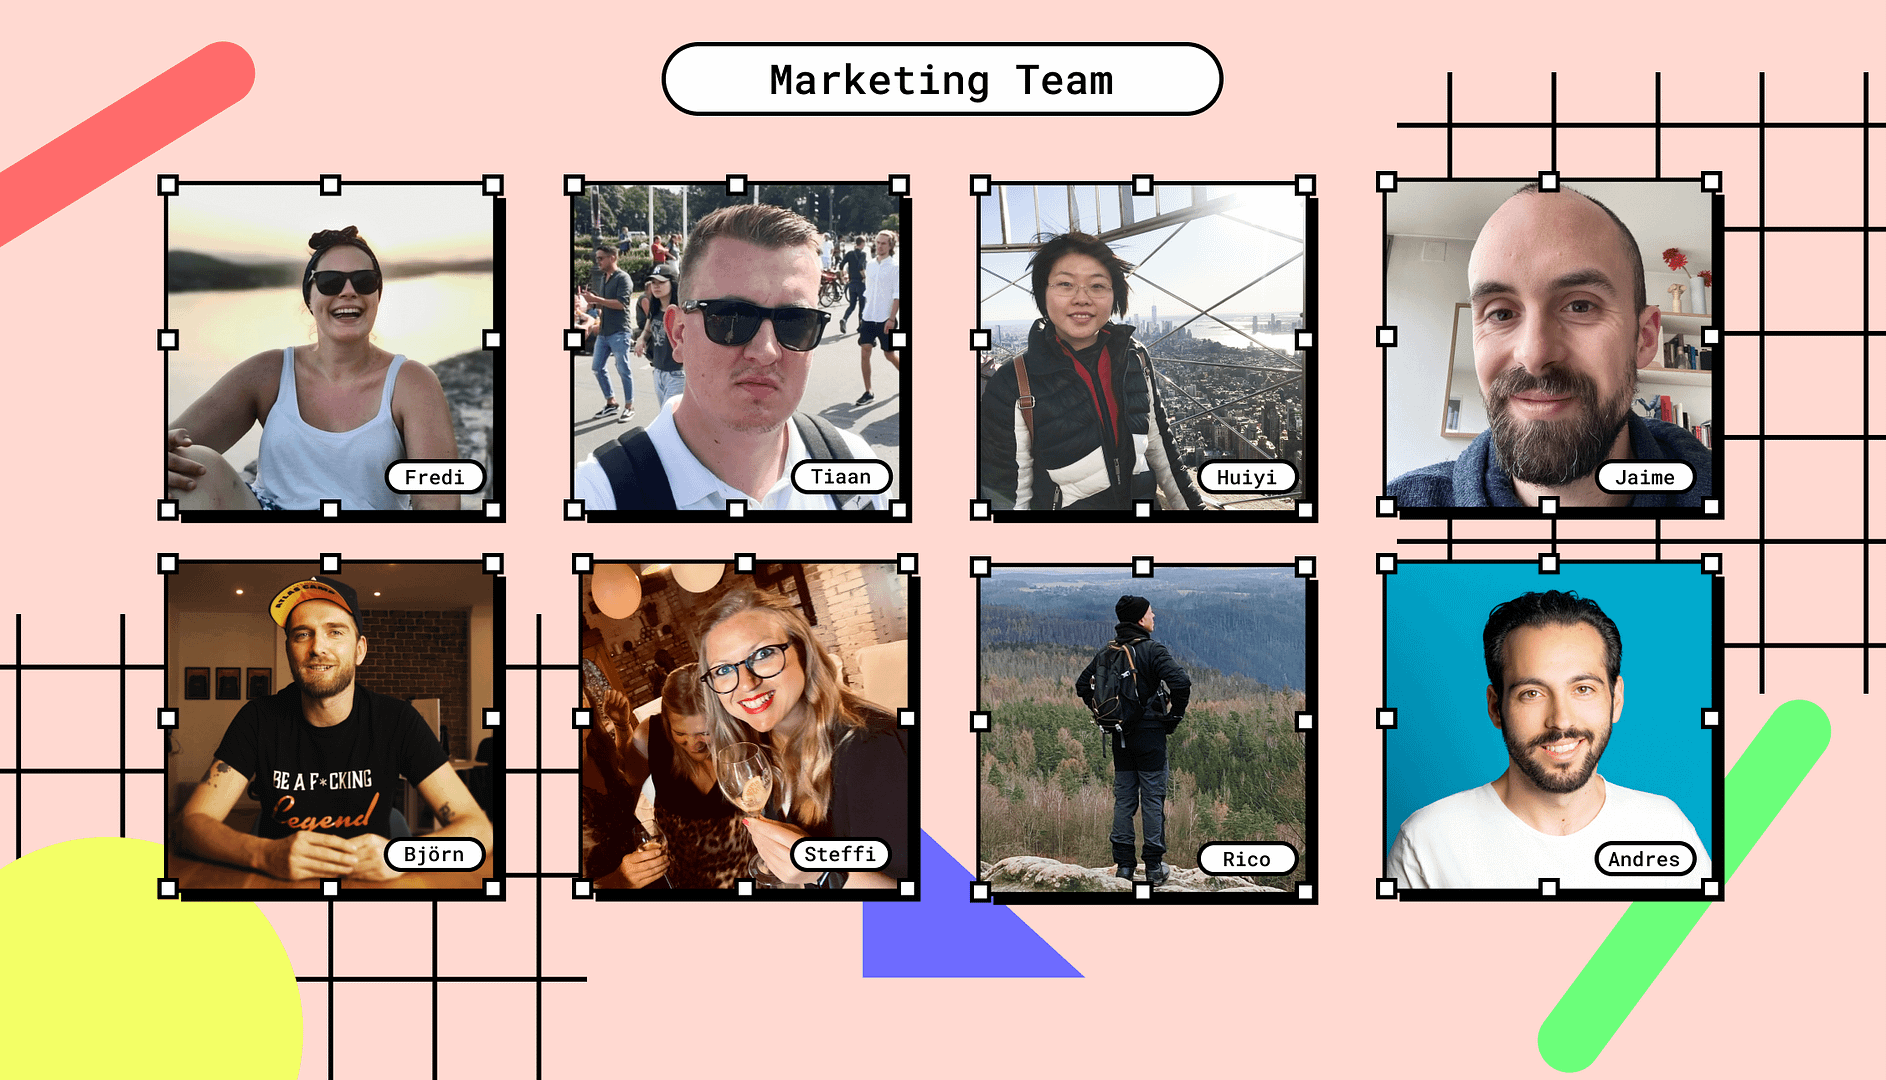 The resolution marketing team